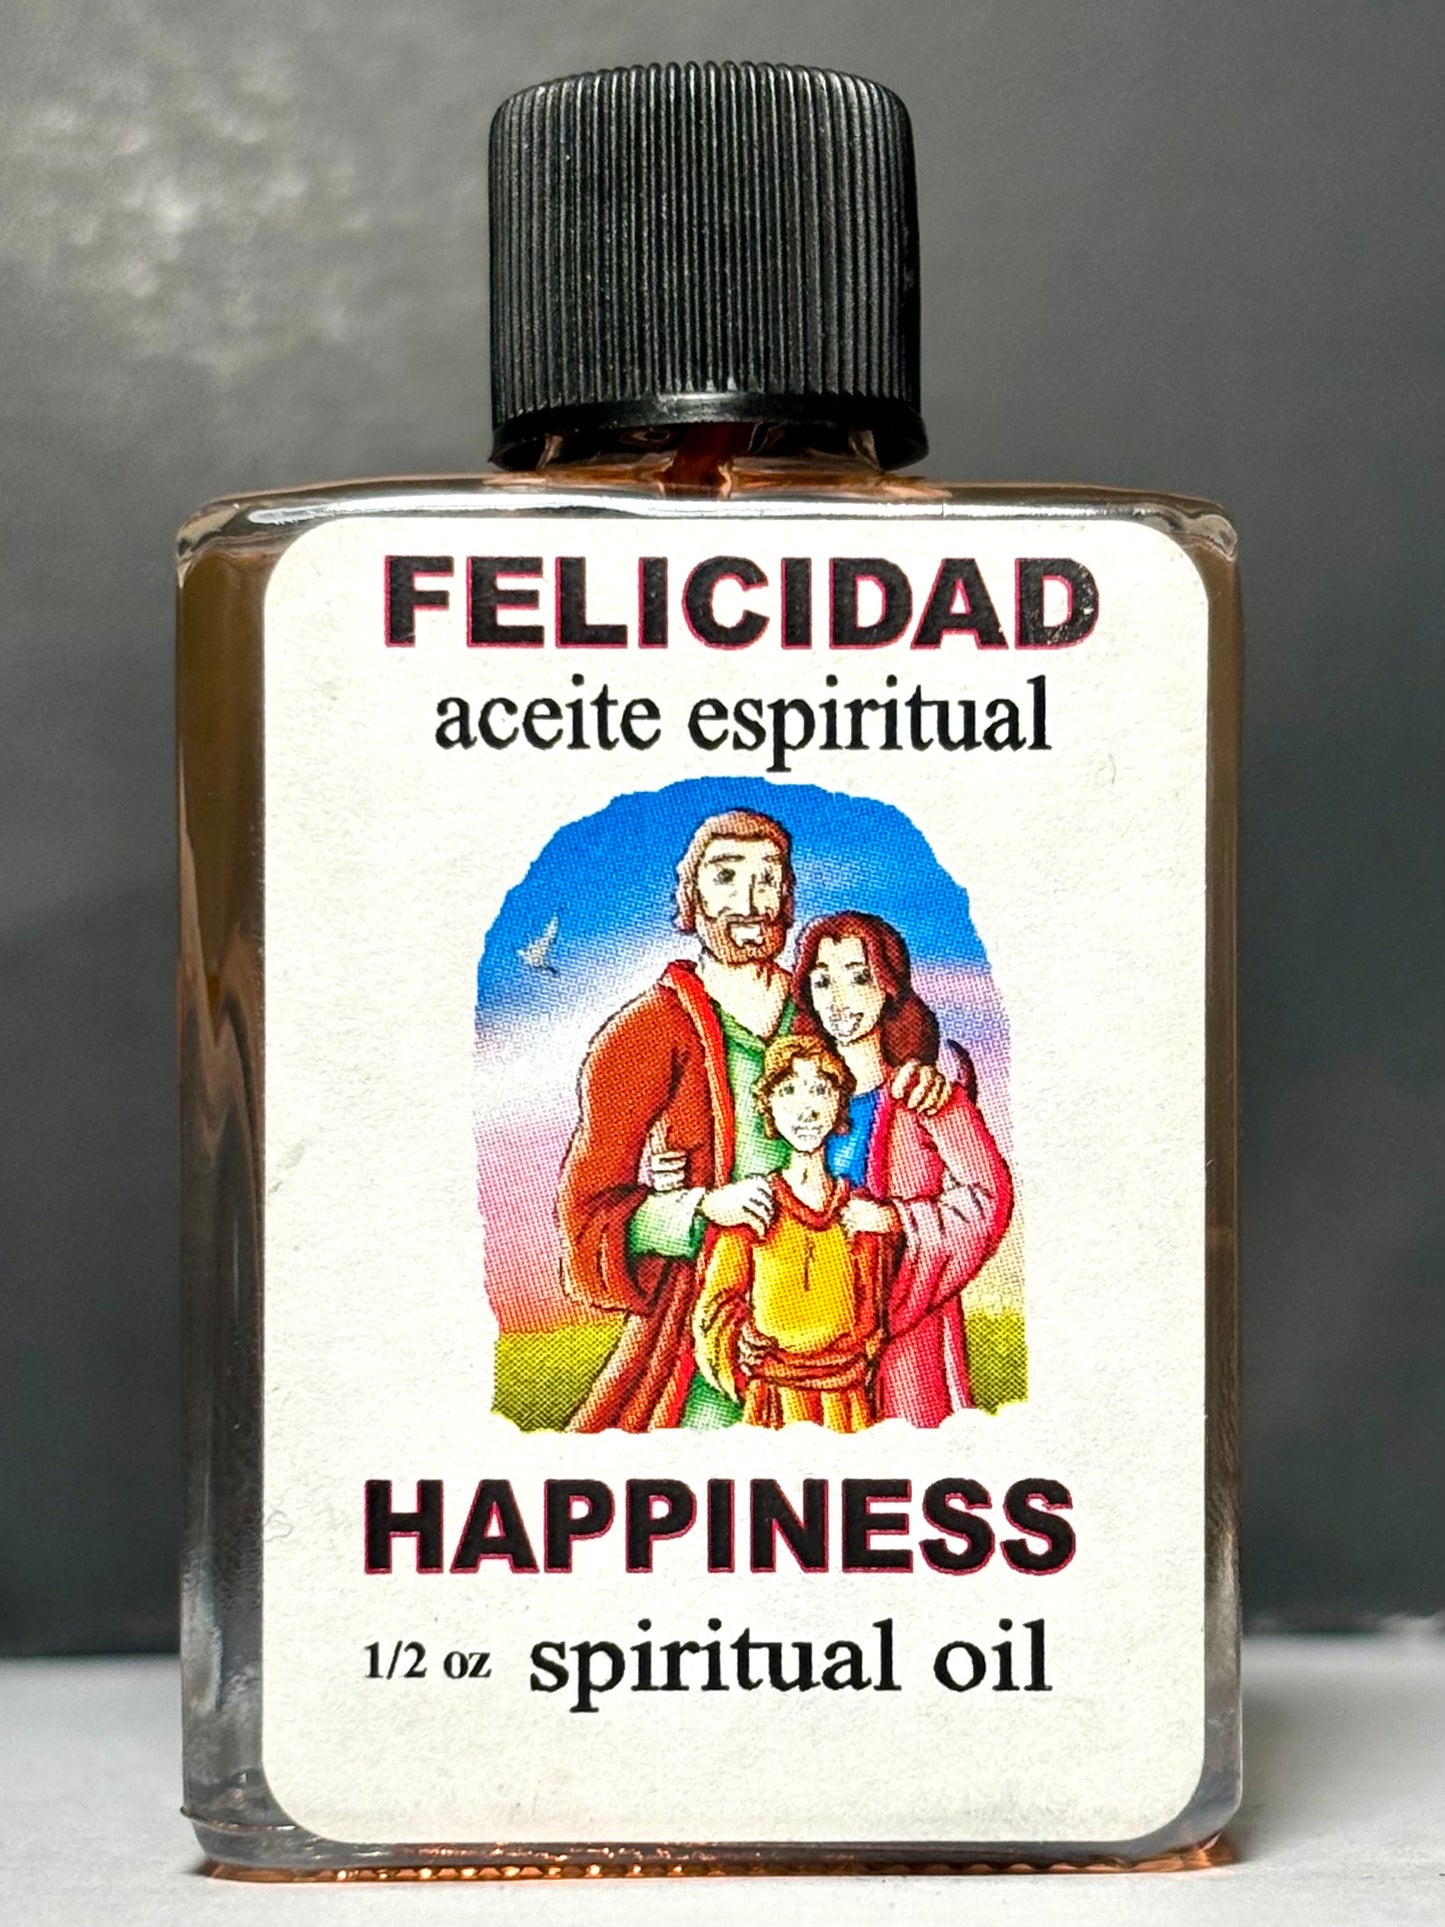 Felicidad - Happiness